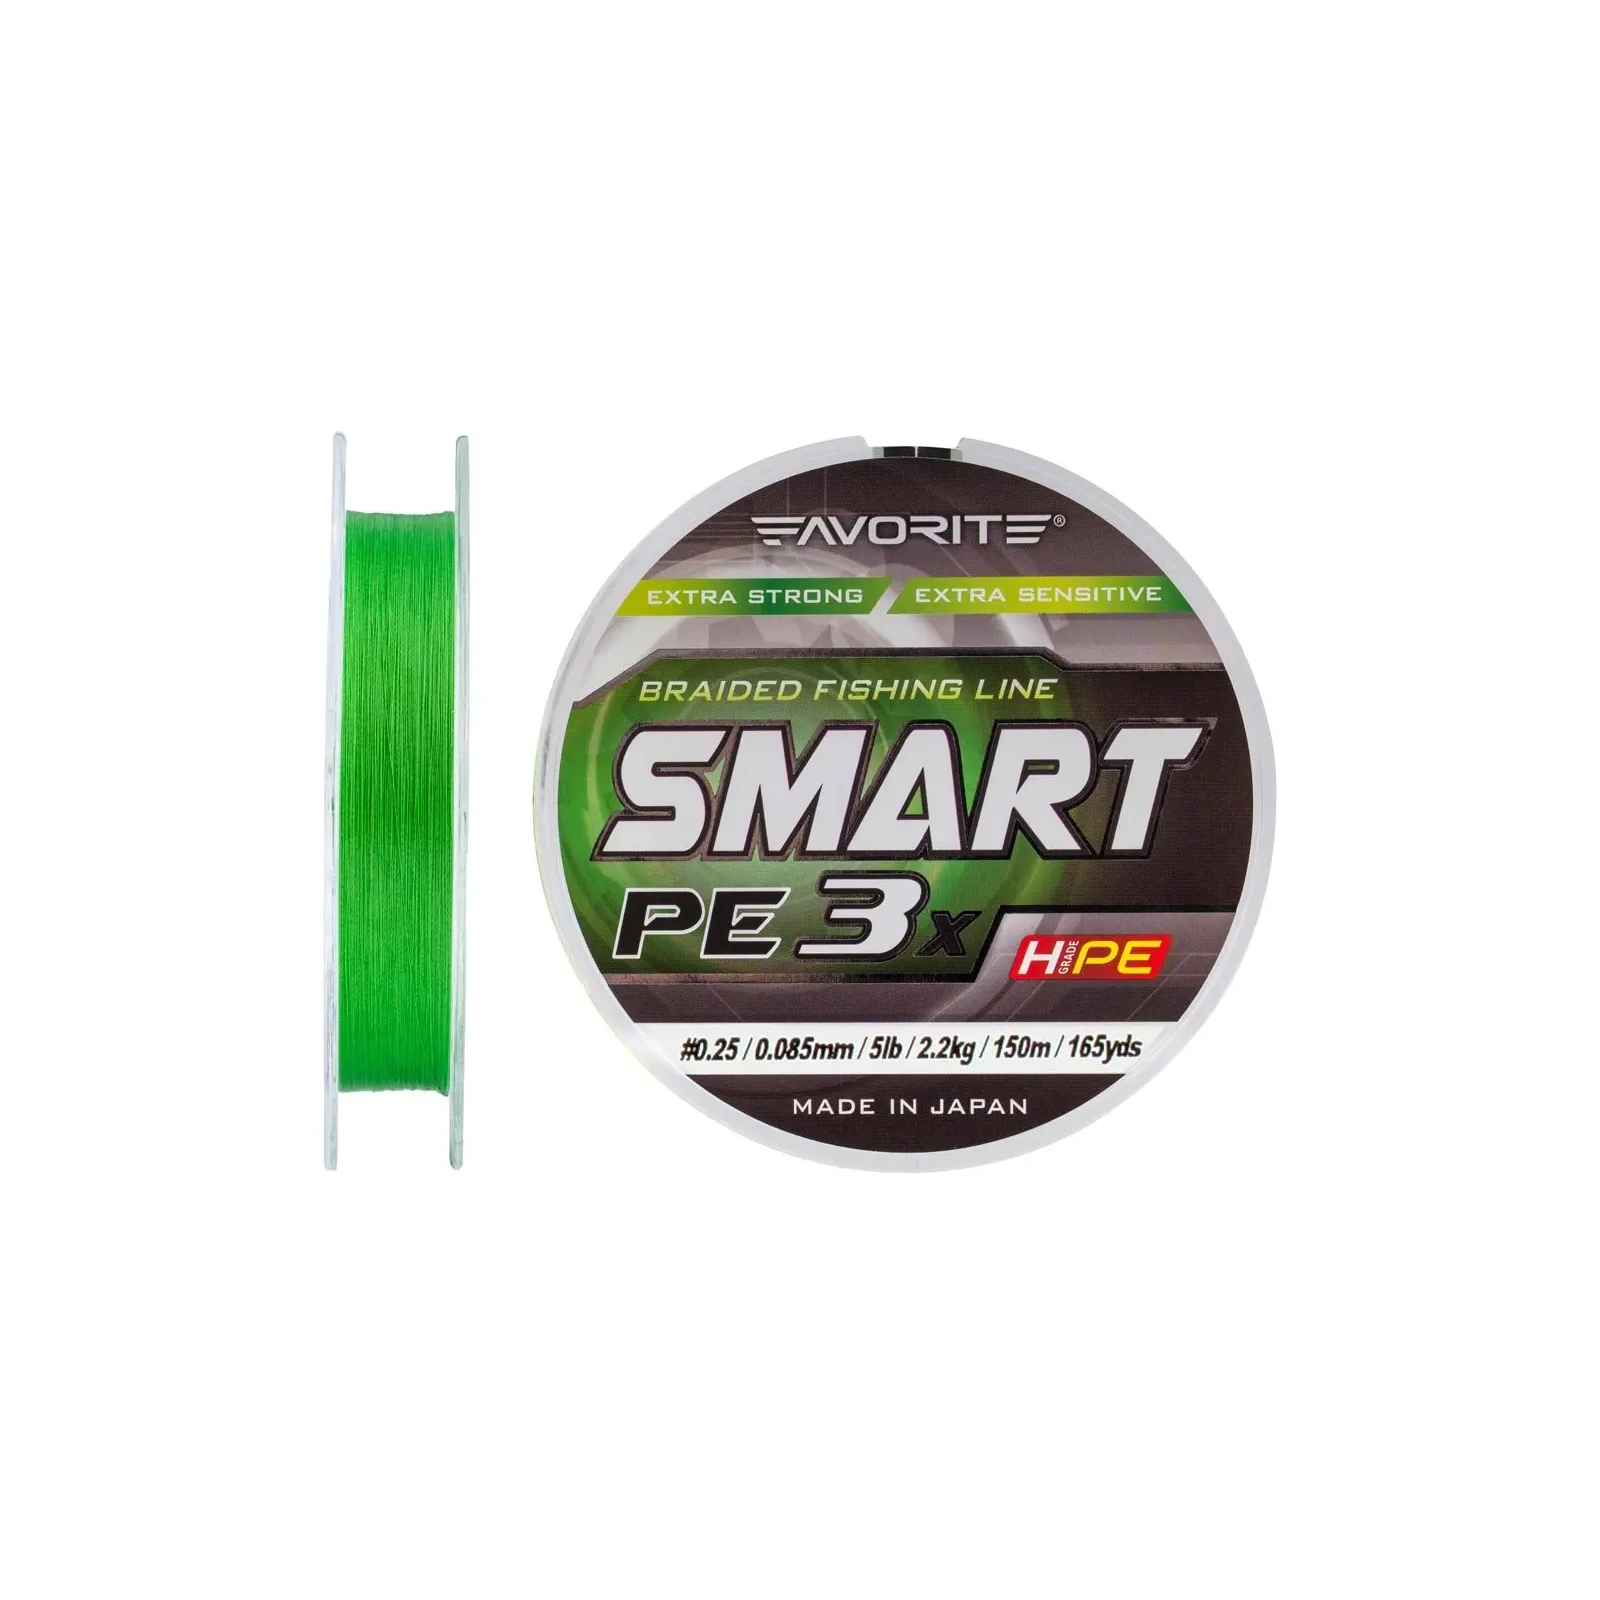 Шнур Favorite Smart PE 3x 150м 0.25/0.085mm 5lb/2.2kg Light Green (1693.10.62) изображение 2